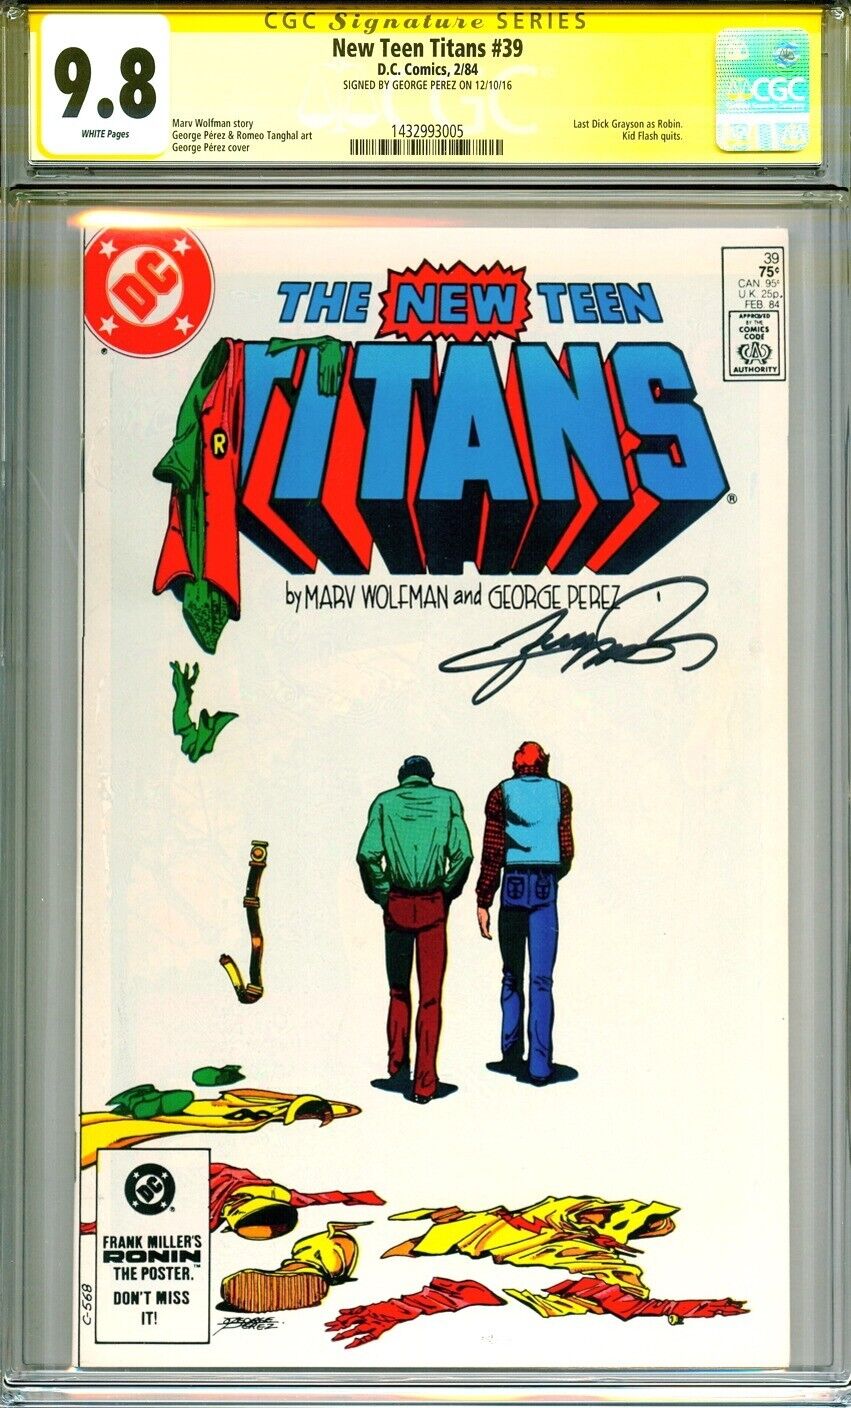 CGC SS 9.8 SIGNED George Perez Art New Teen Titans 39 Last Dick Grayson As Robin